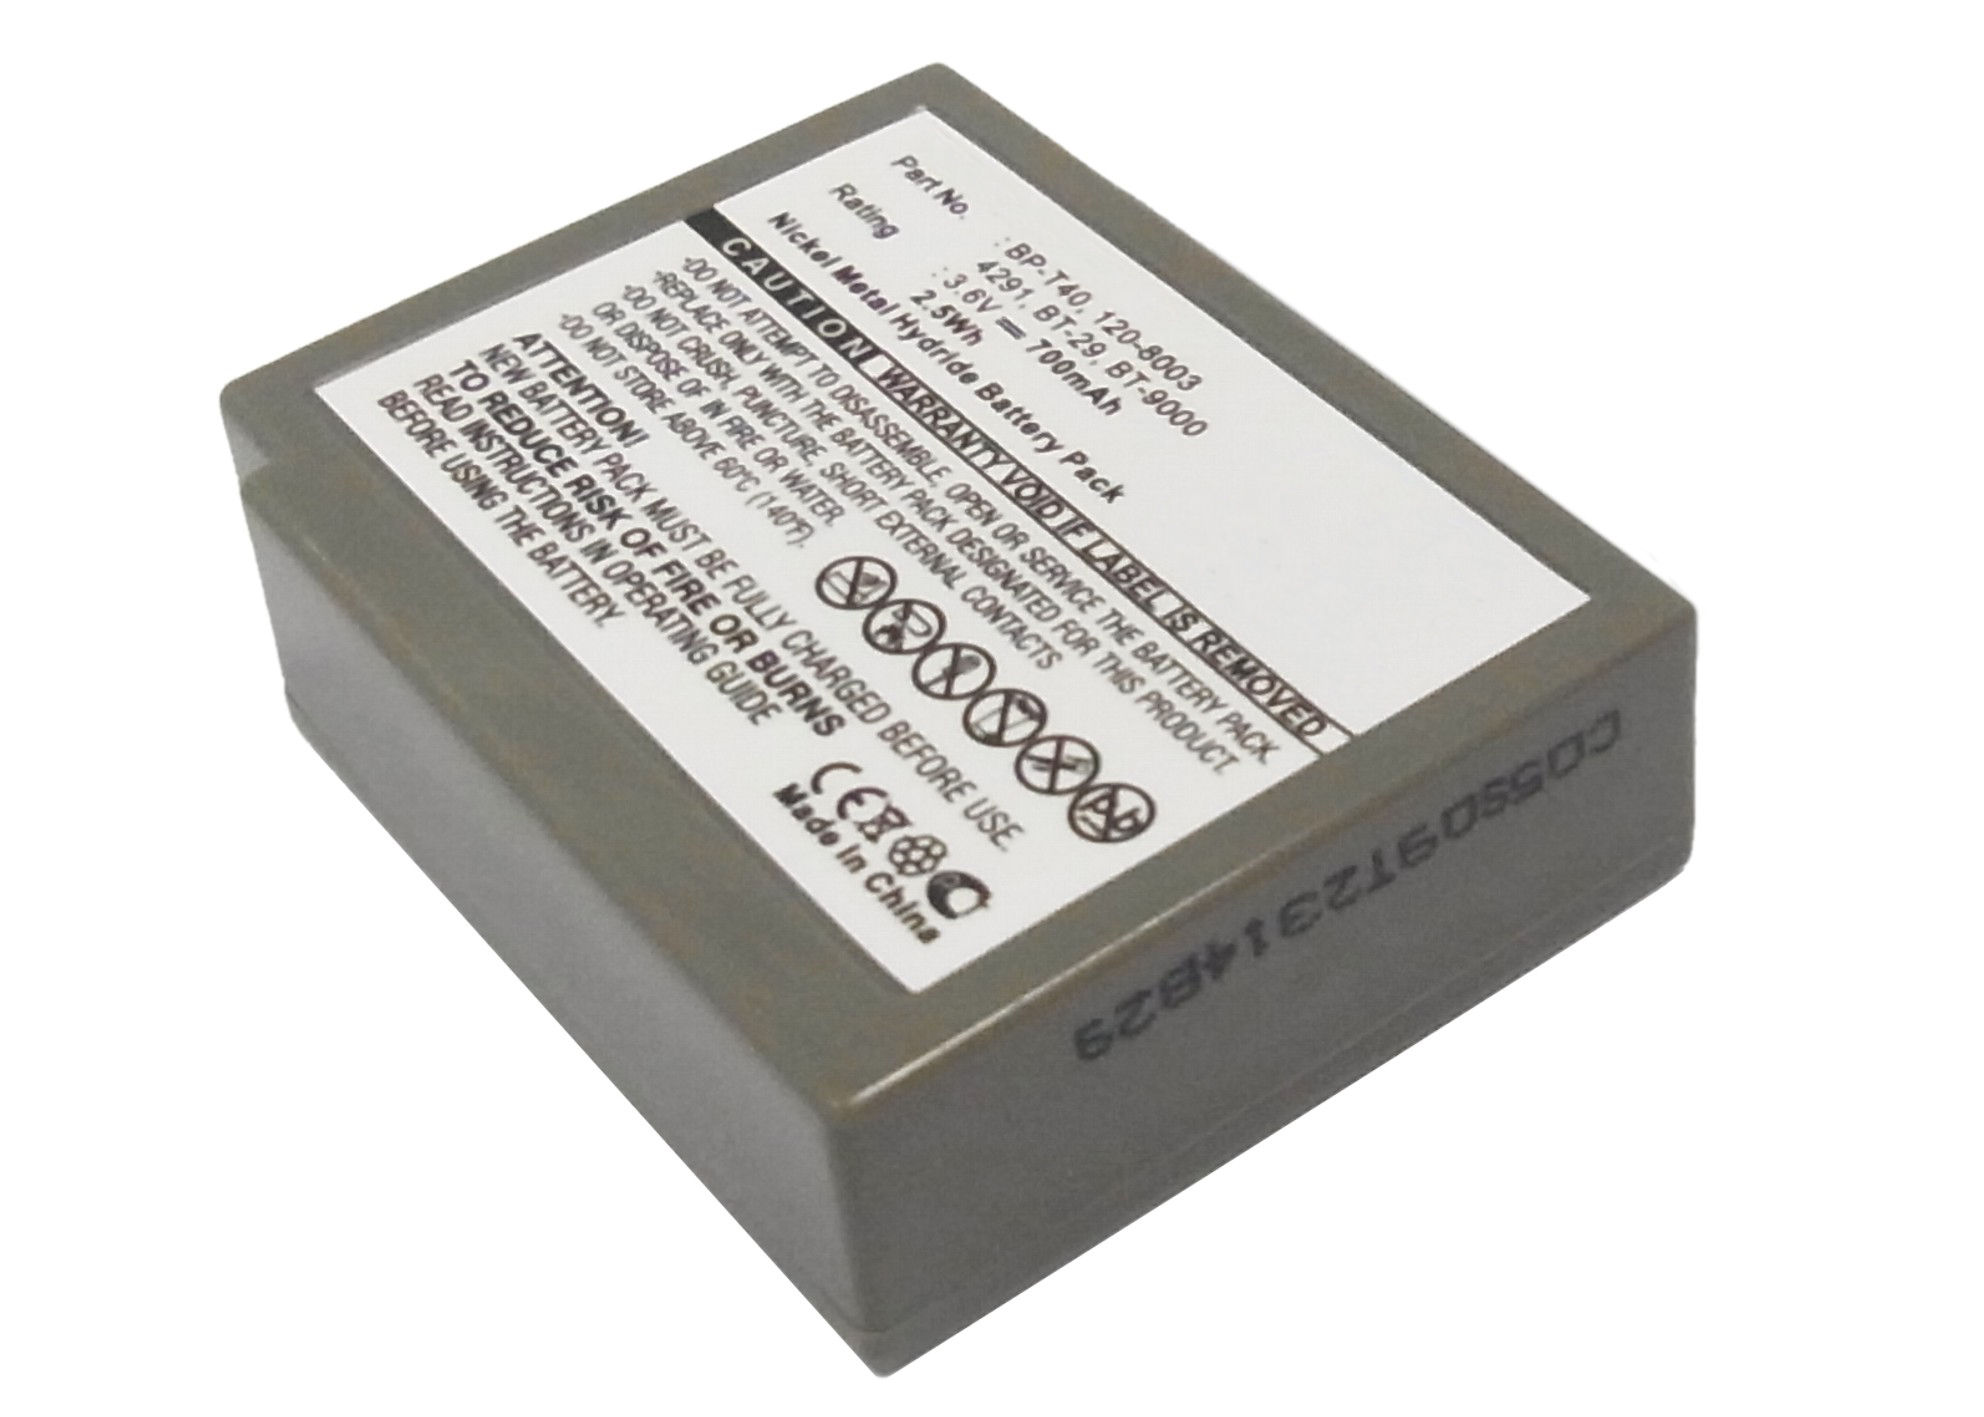 BATT-T40NMH - Ni-MH, 3.6 Volt, 650 mAh, Ultra Hi-Capacity Battery - Replacement Battery for SONY BP-T40 Cordless Phone Battery